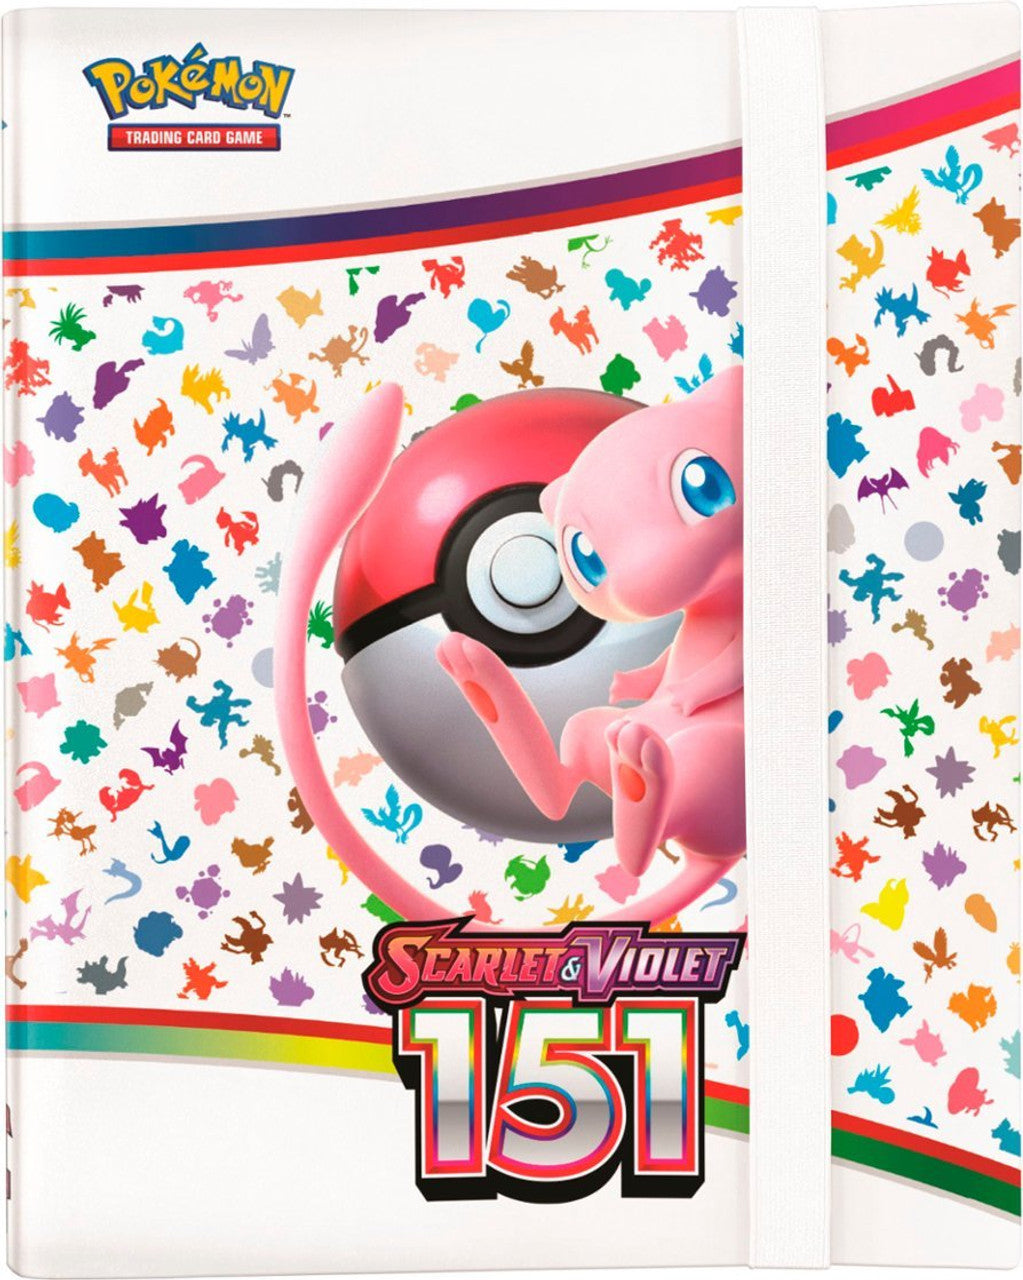 2X Pokémon 151 Booster Pack